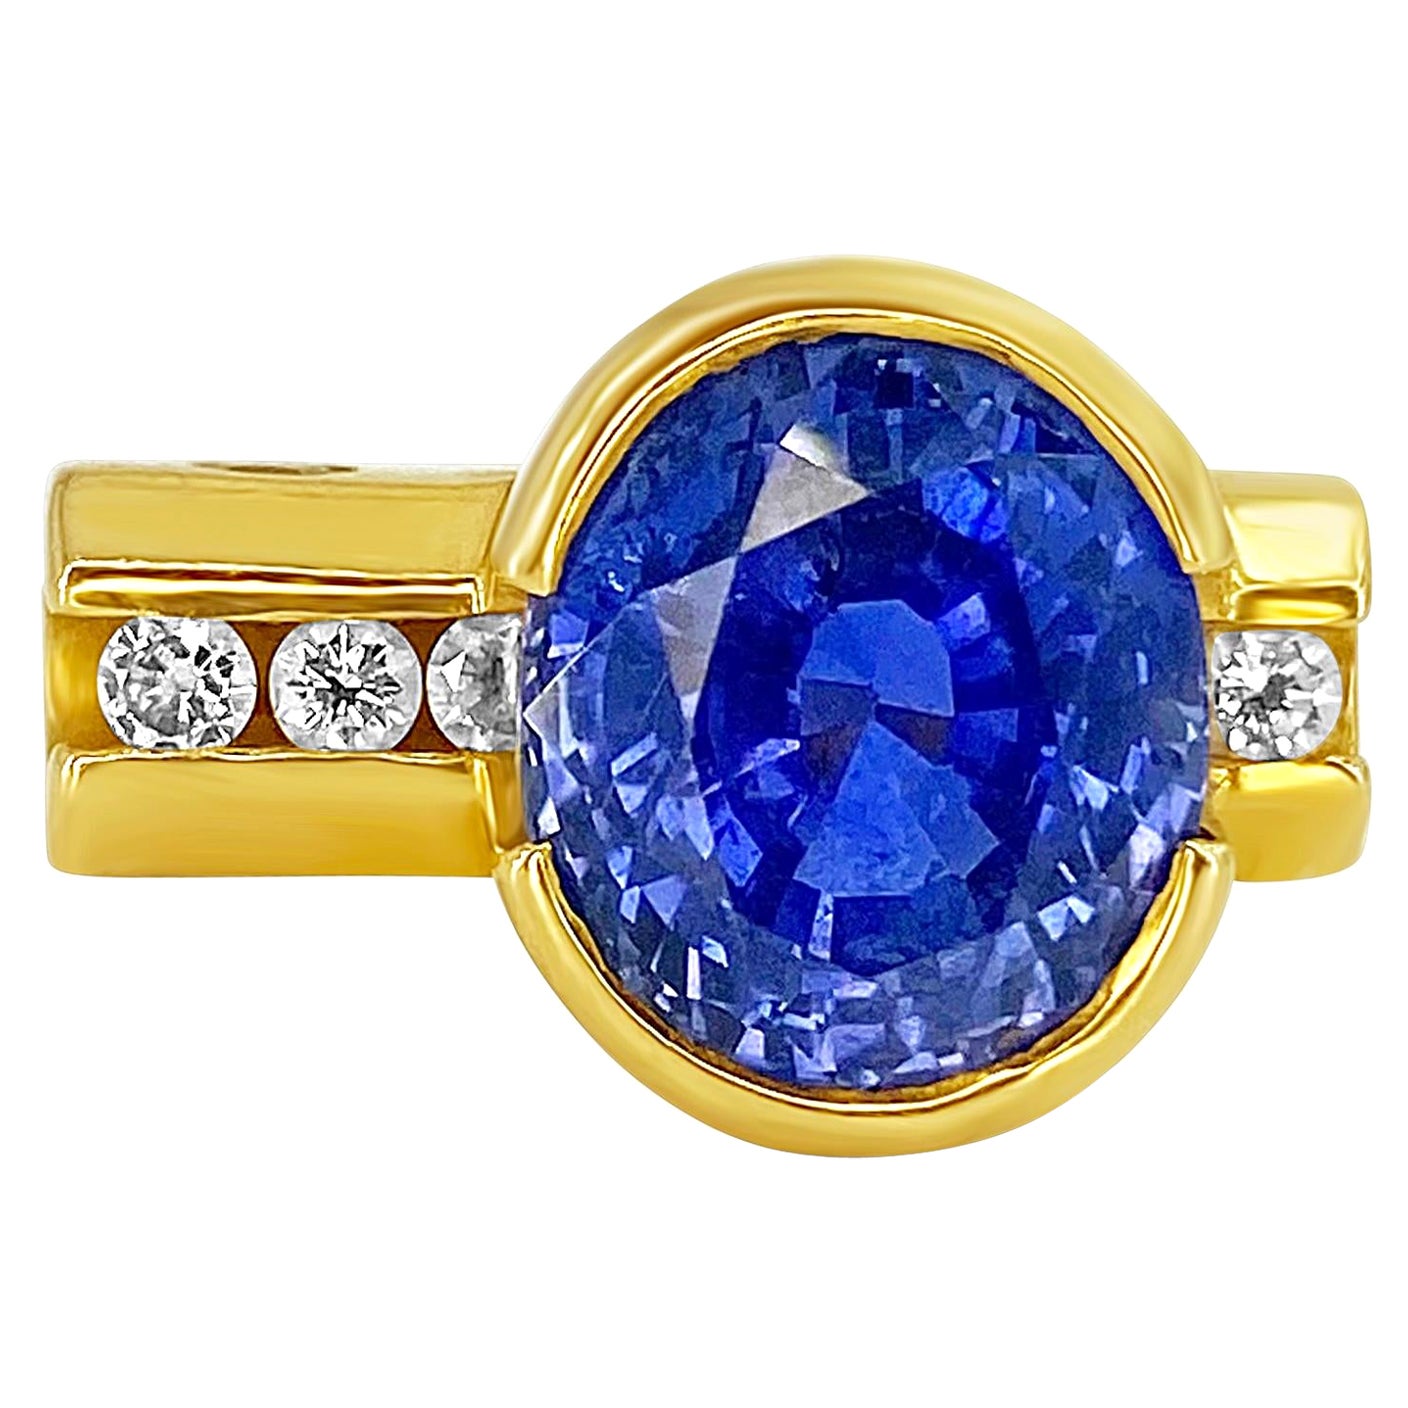 5 Carat Oval Cut Natural Blue Ceylon Sapphire Set in Platinum Ring